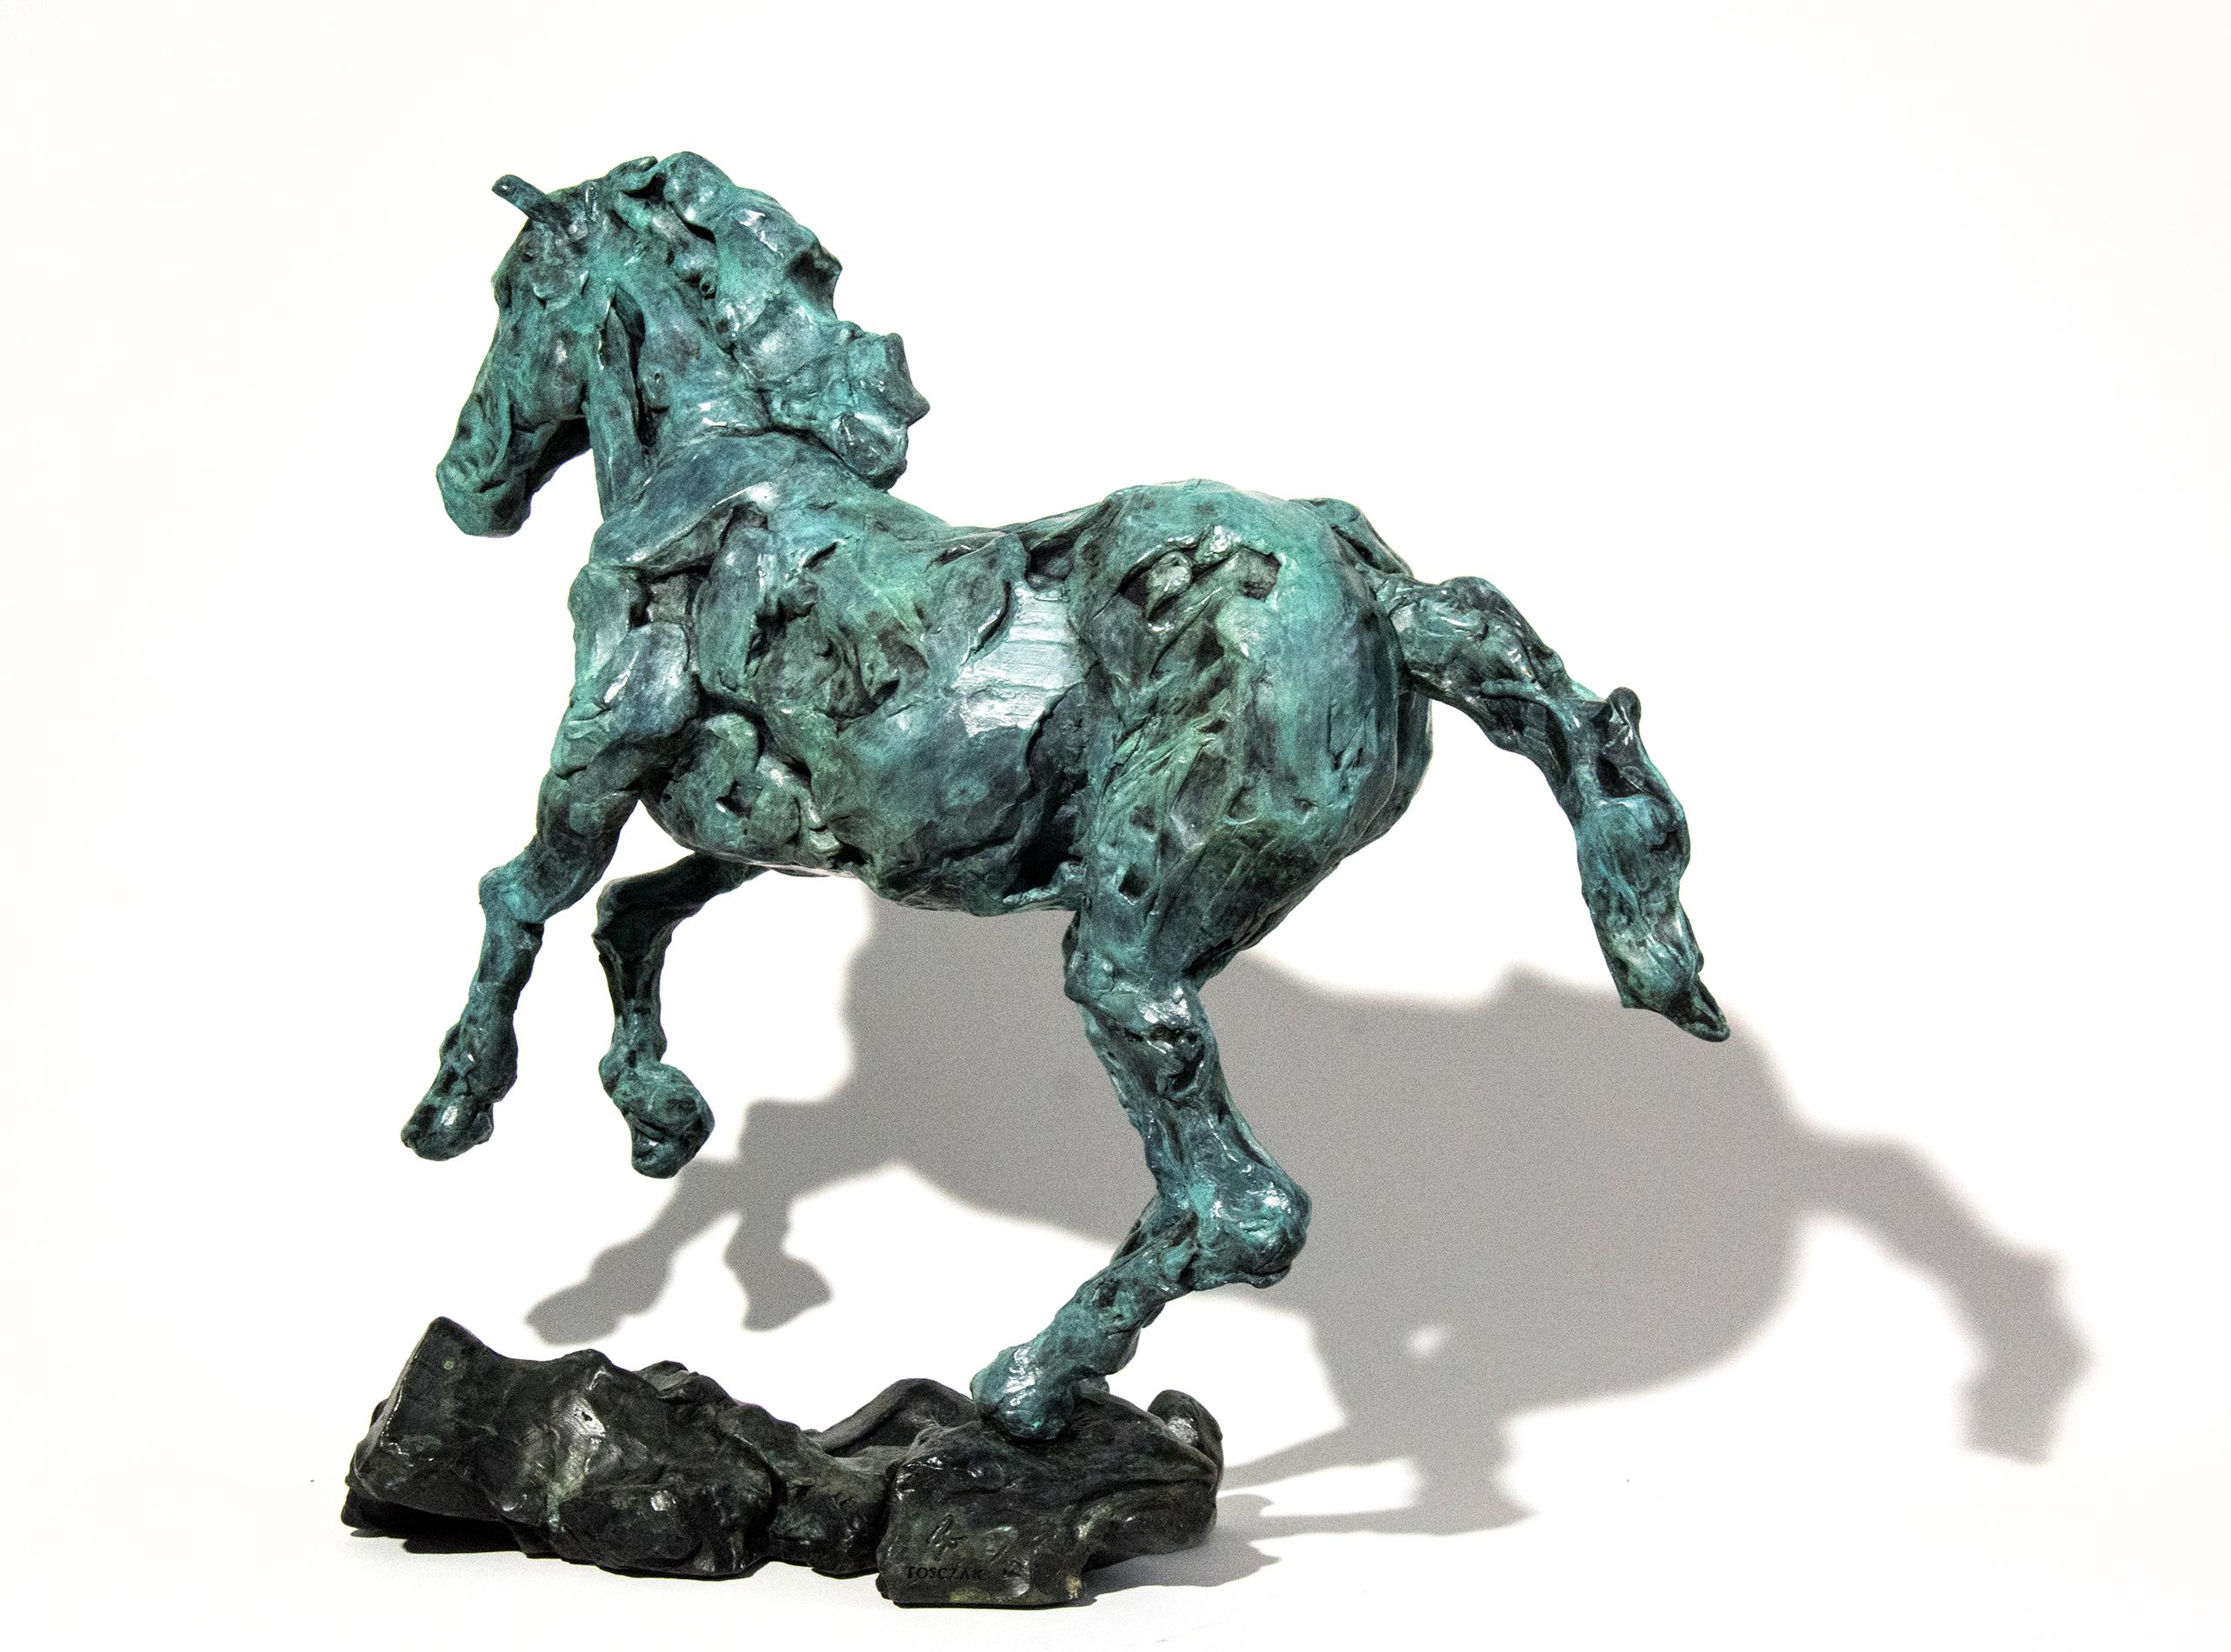 Friesian 3/12 - lively, movement, animal, horse, figurative, bronze statuette - Contemporary Sculpture by Richard Tosczak